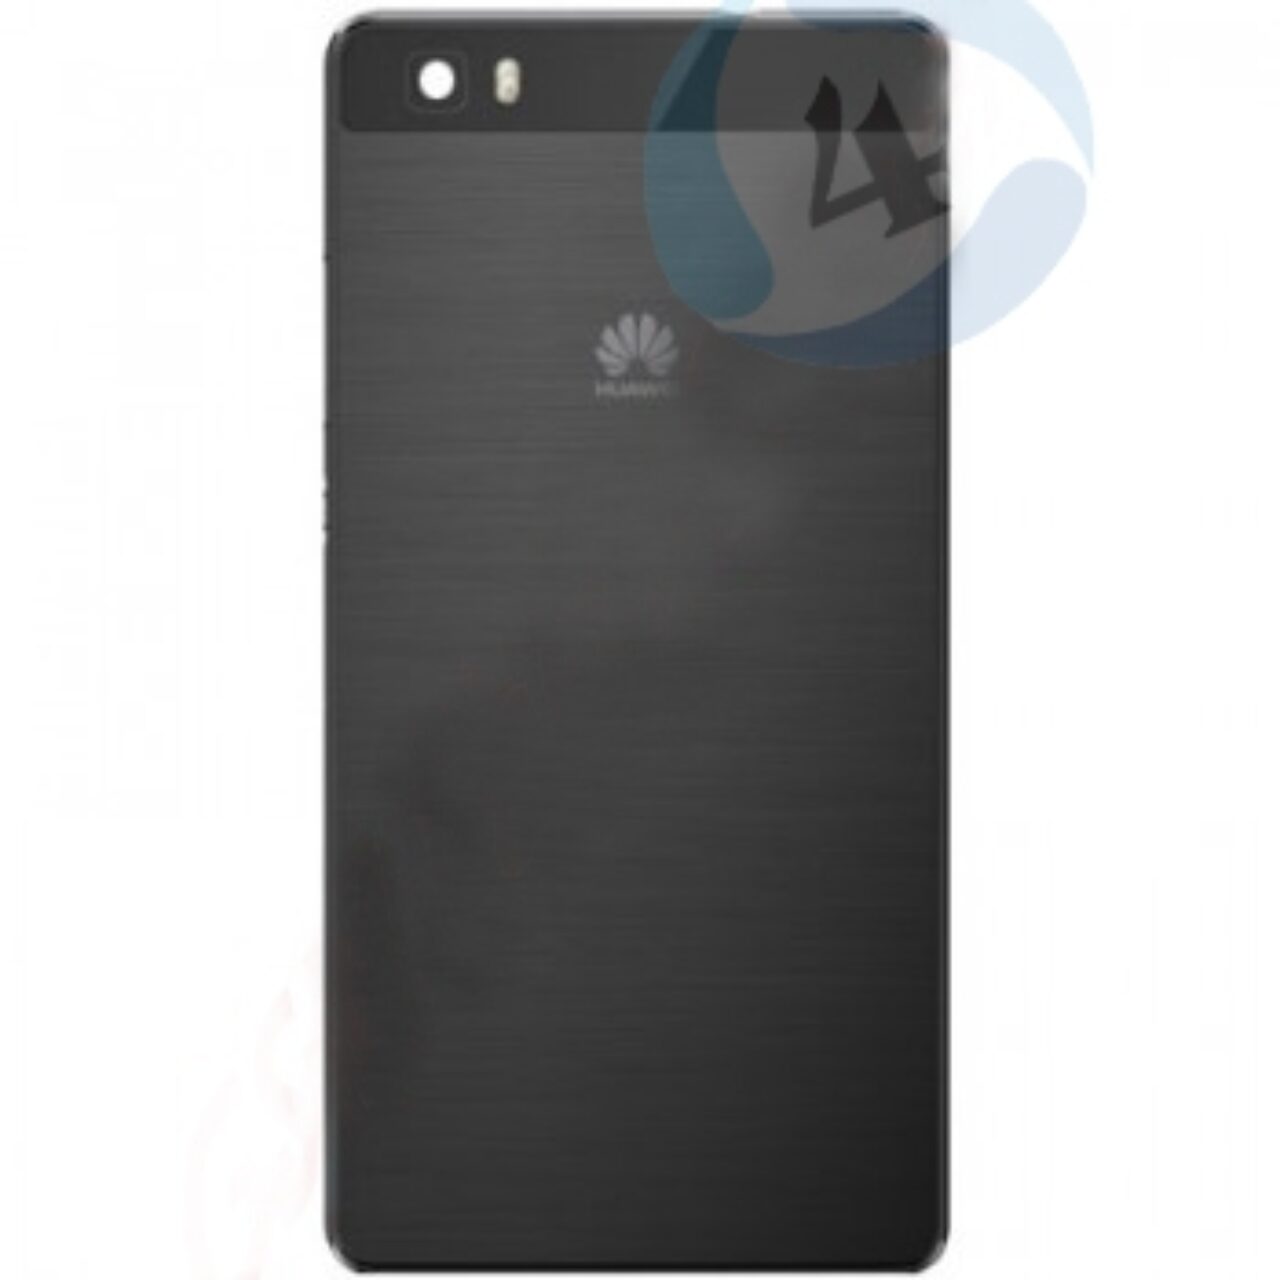 Huawei p8 lite backcover black